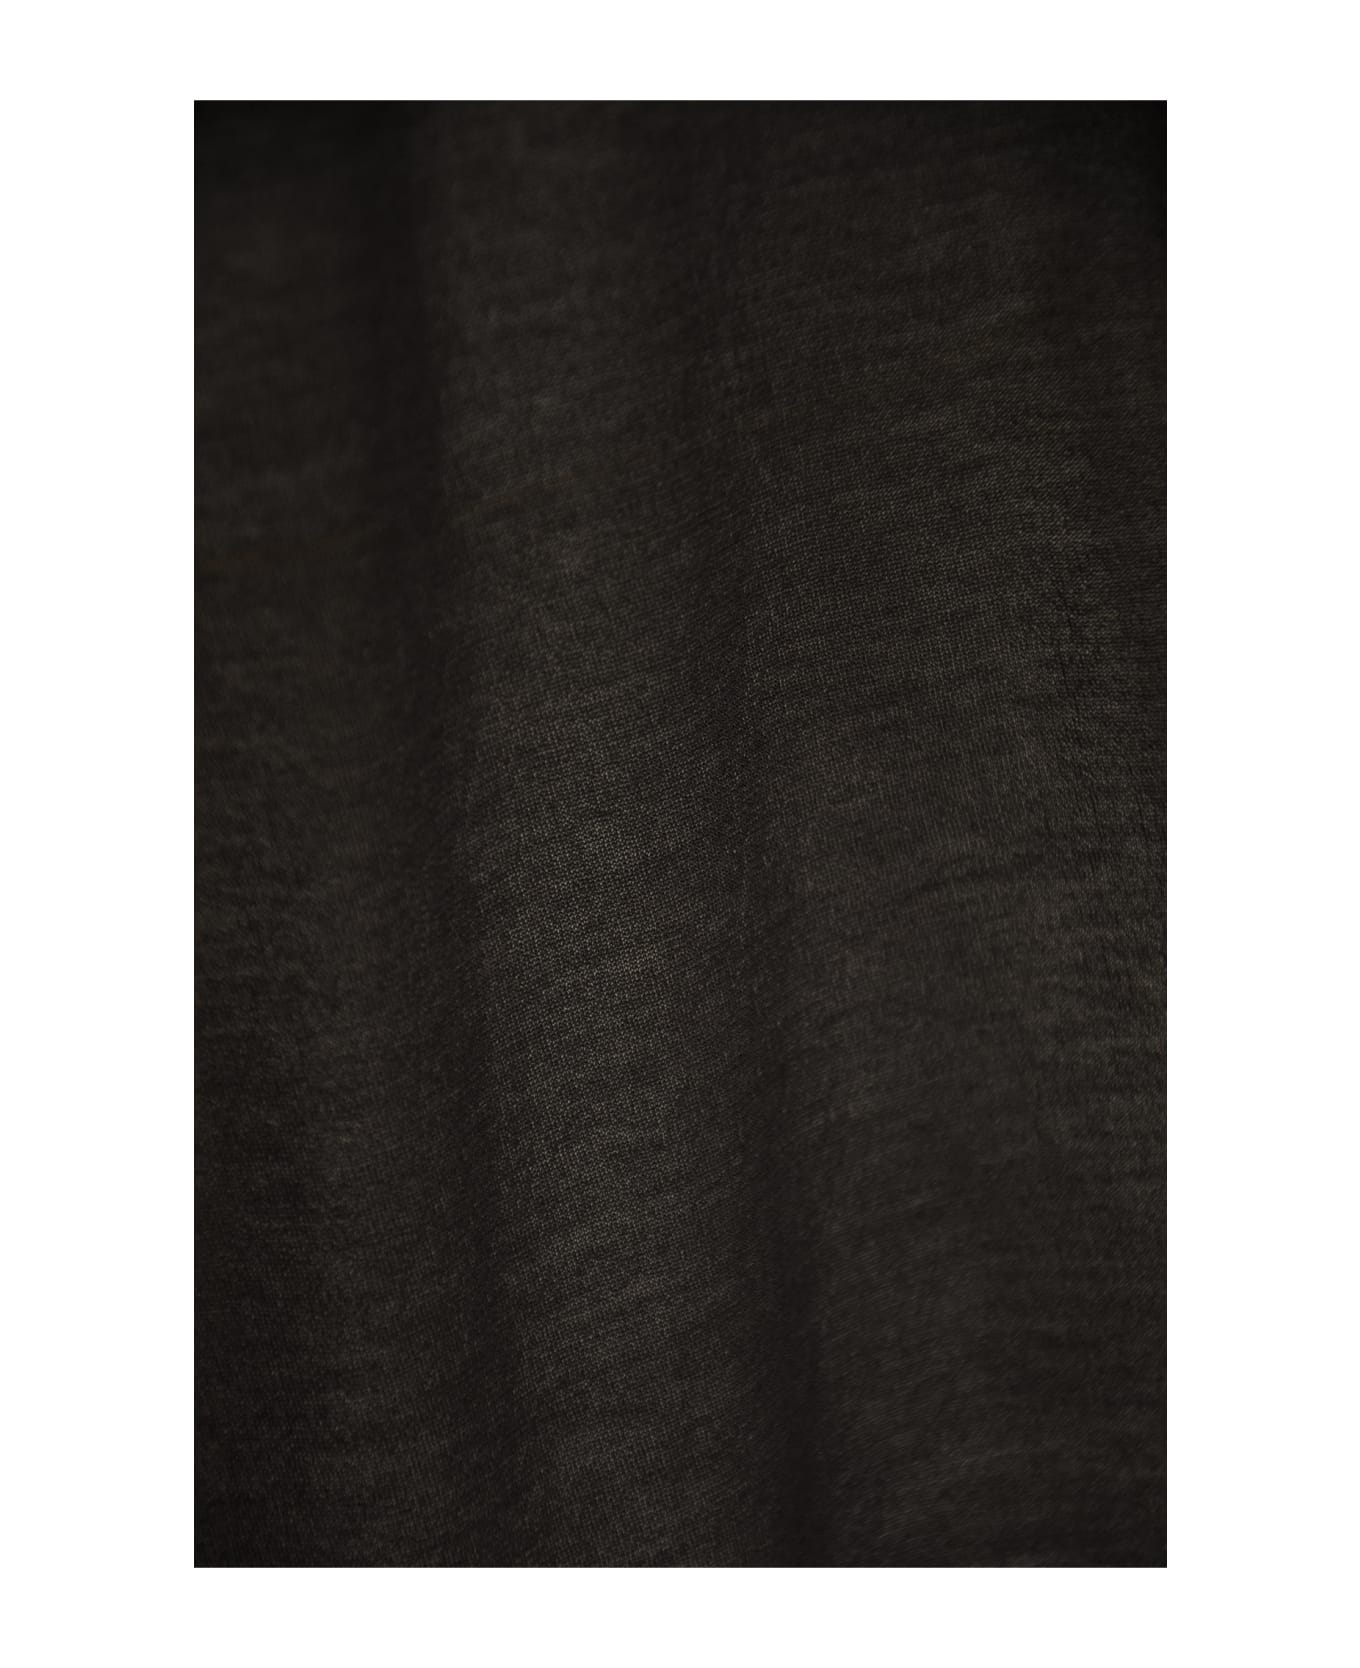 Roberto Collina Round Neck Plain Sweatshirt - Black